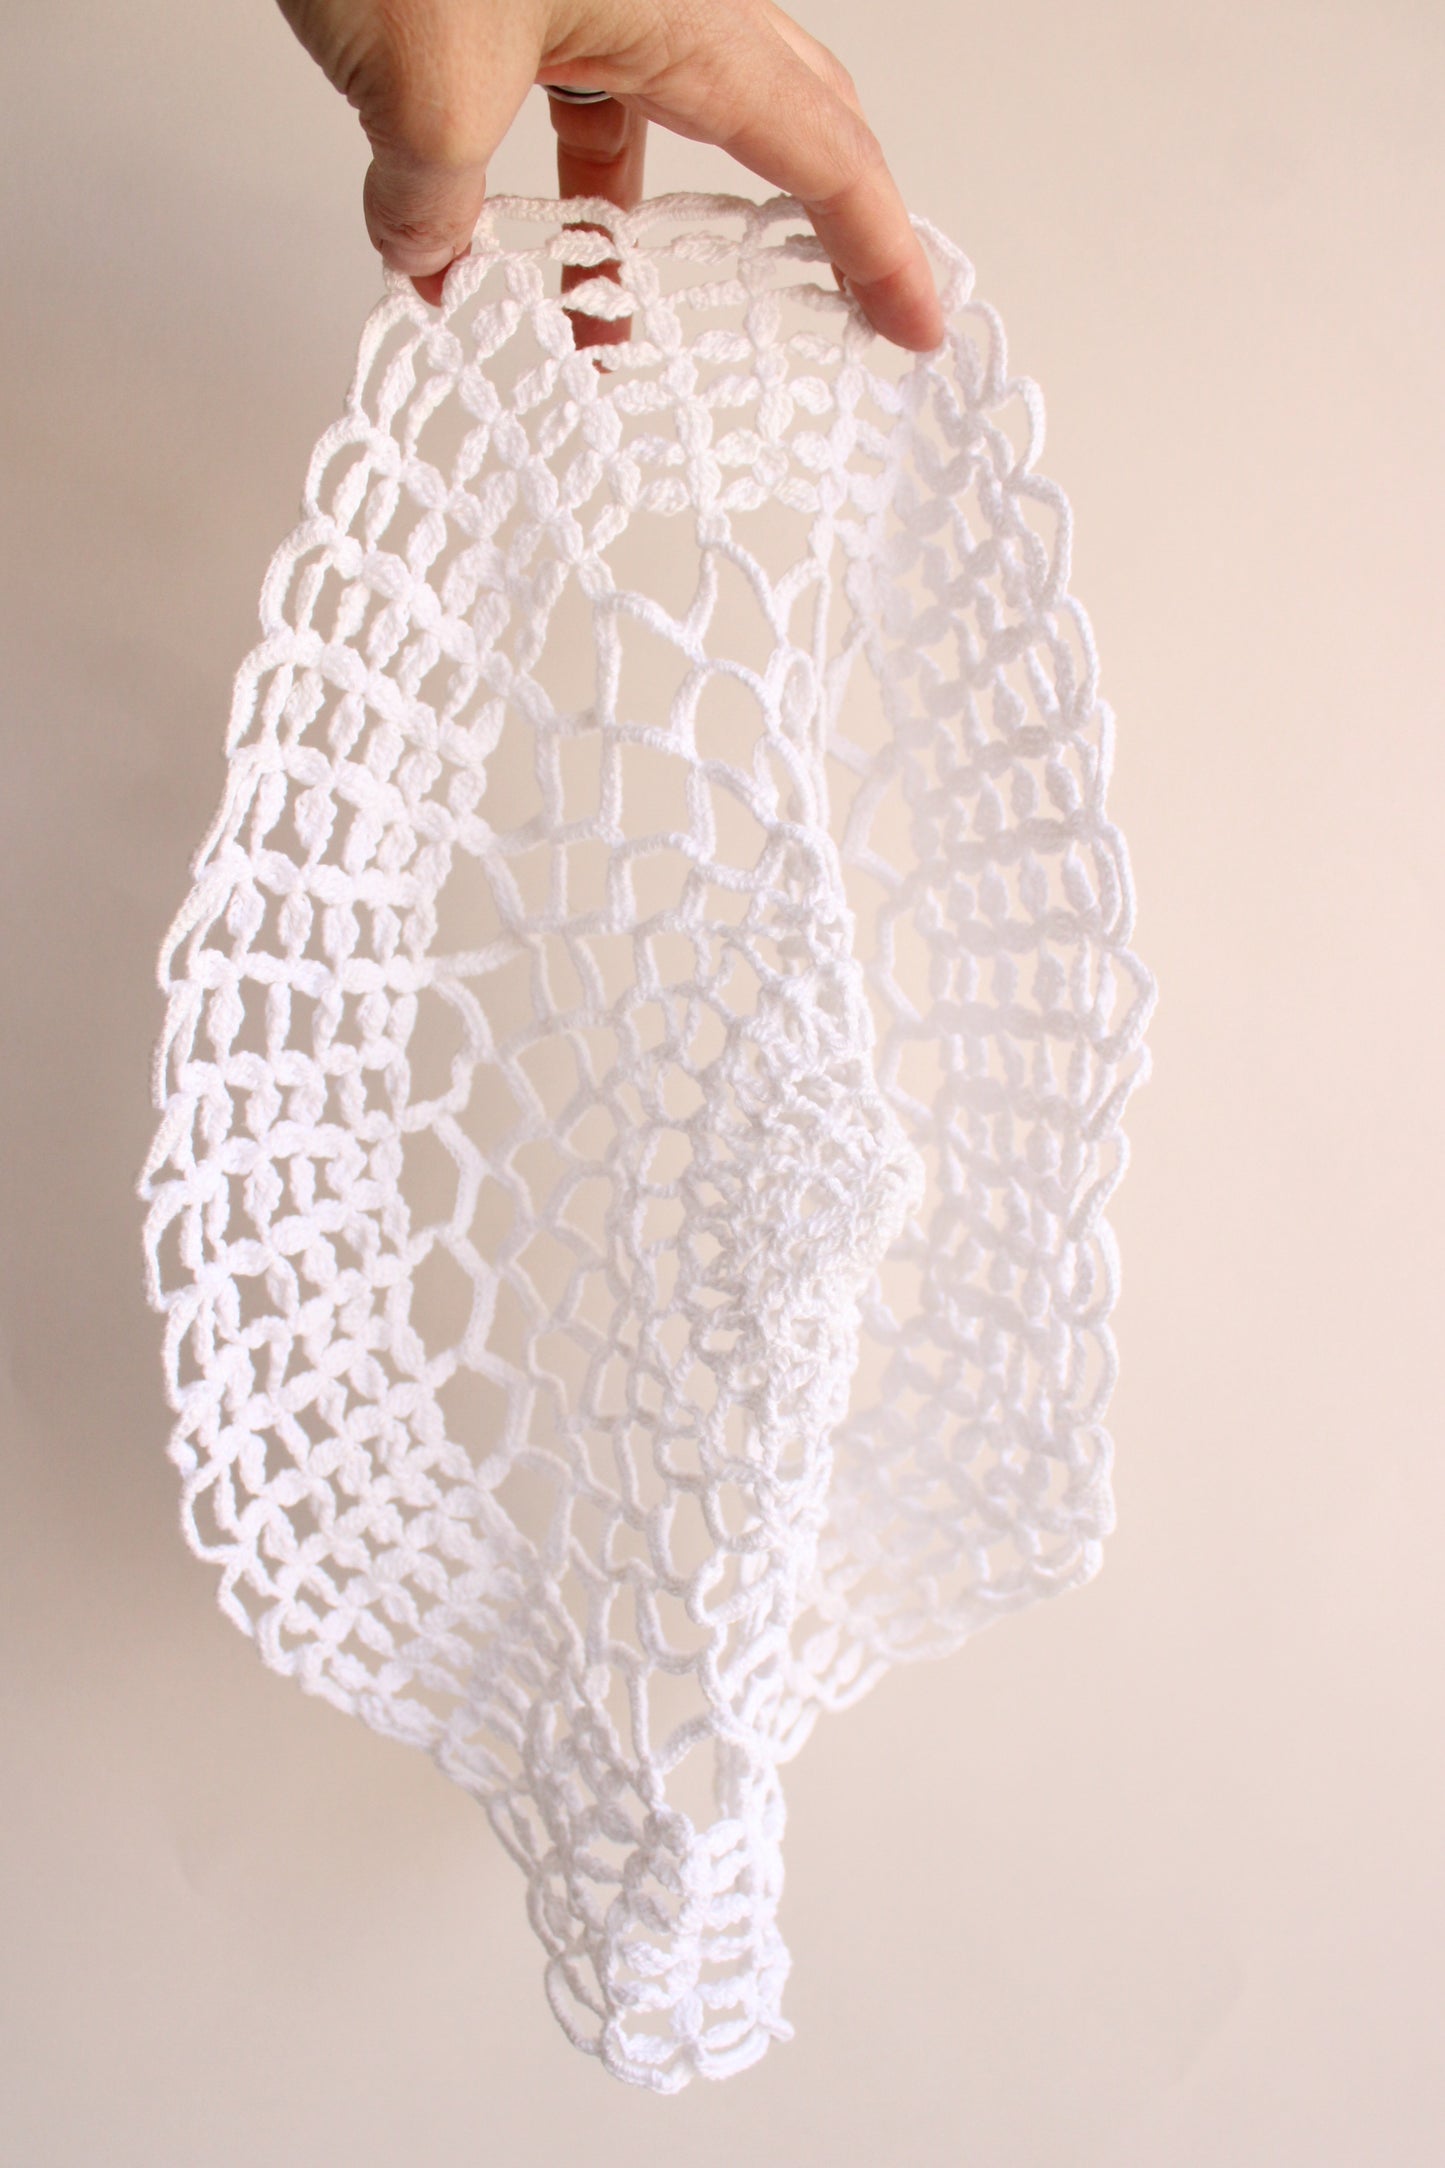 Vintage White Round Crochet Doily